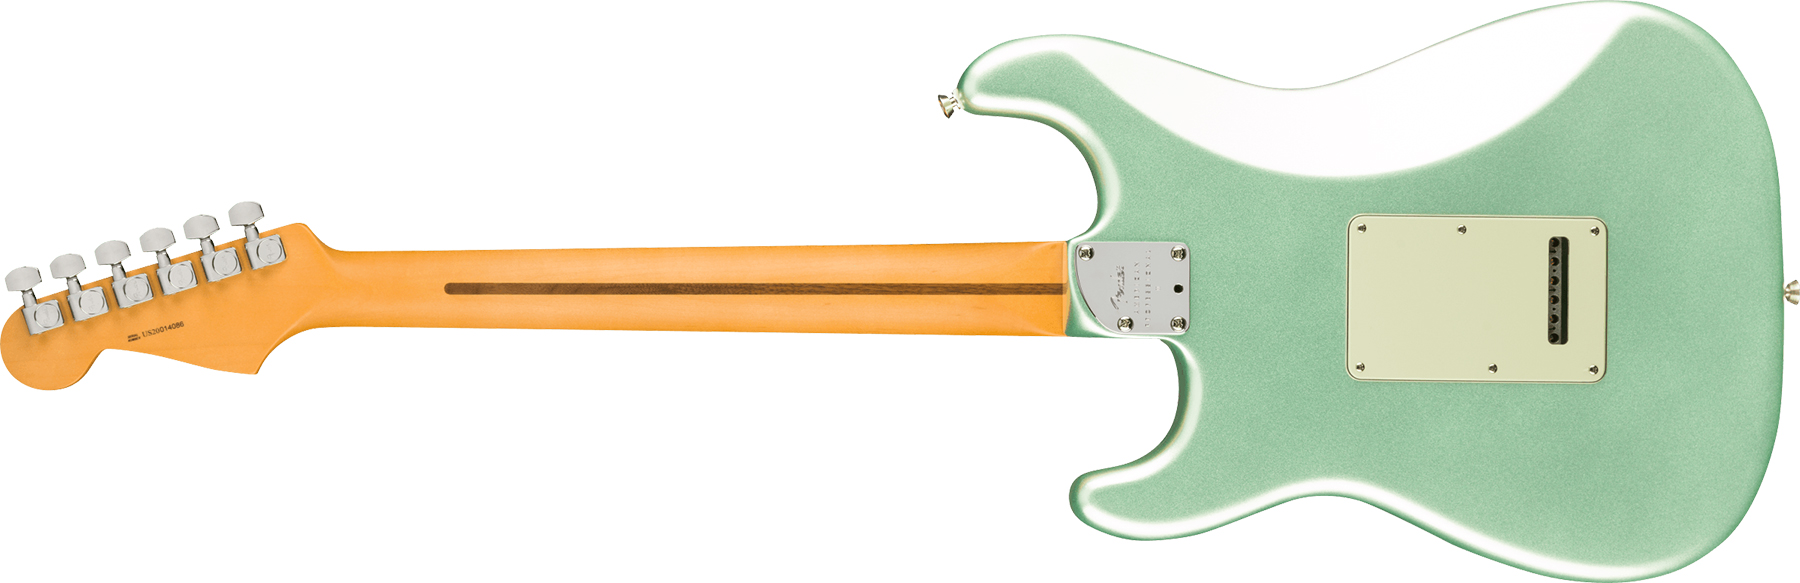 Fender Strat American Professional Ii Usa Mn - Mystic Surf Green - Guitarra eléctrica con forma de str. - Variation 1